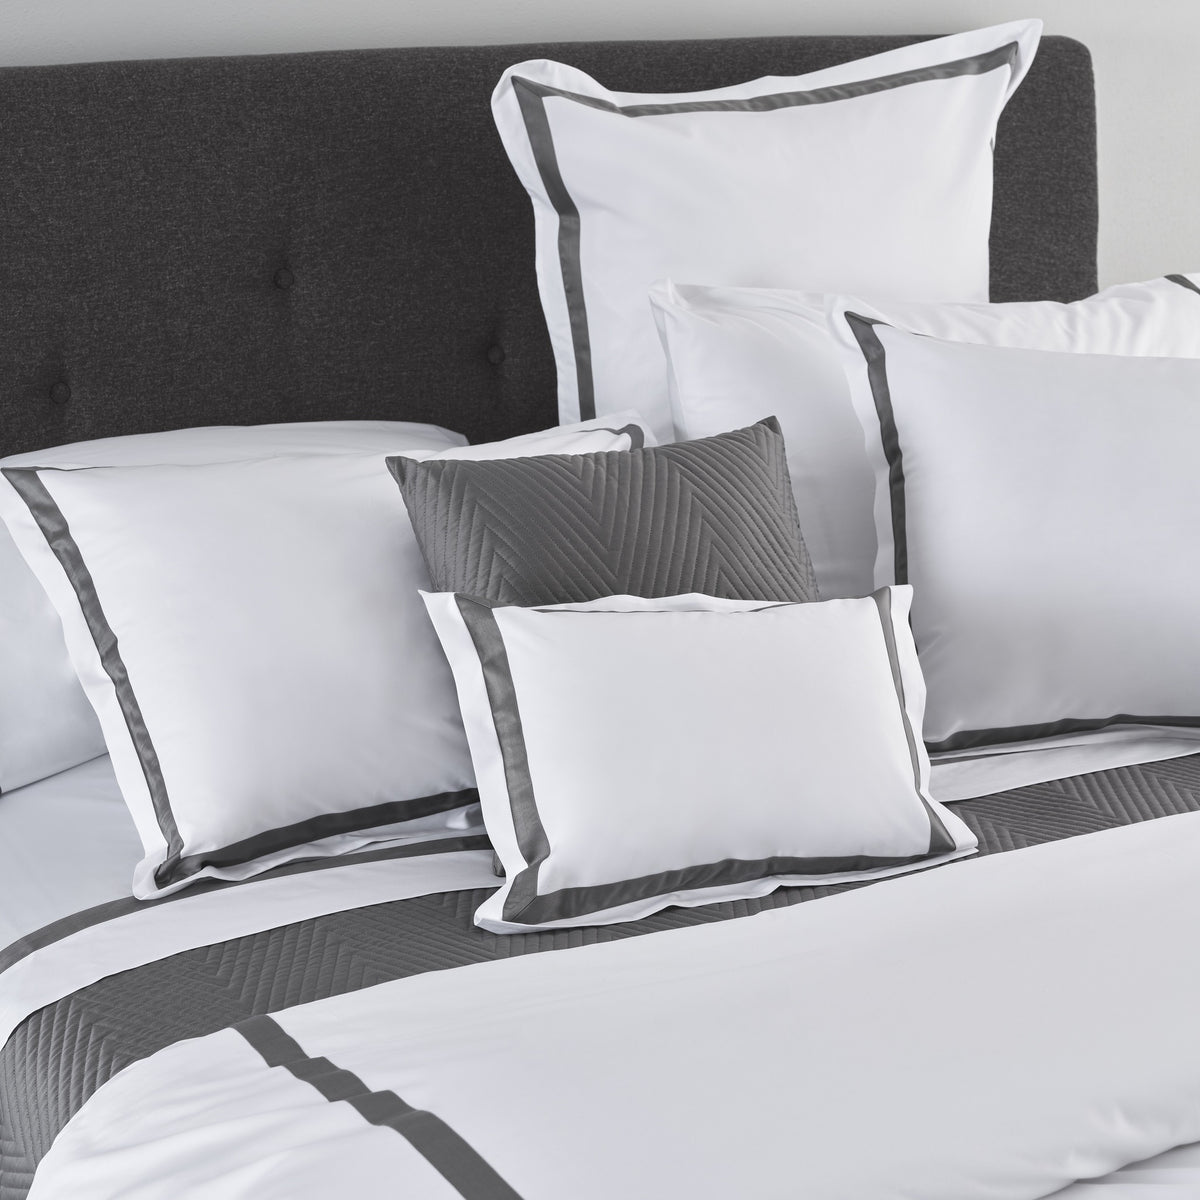 Detail of Signoria Pegaso Bedding in White/Lead Grey Color